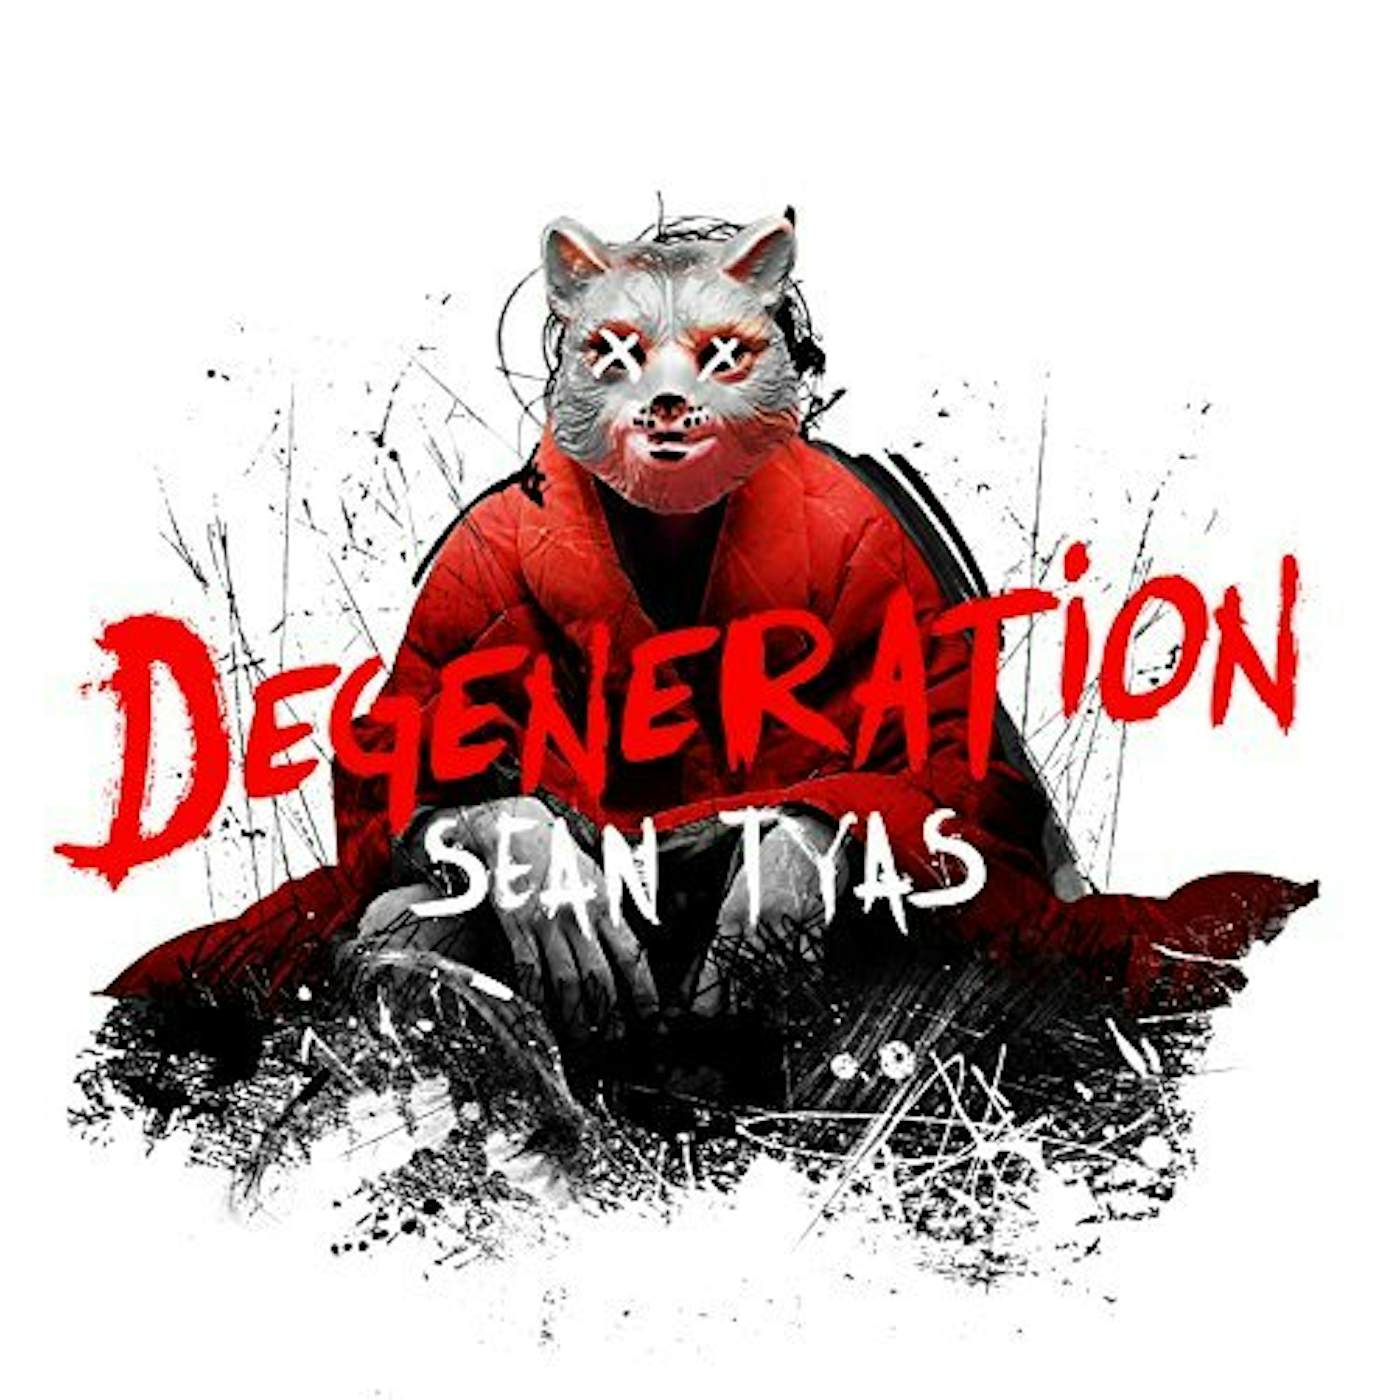 Sean Tyas DEGENERATION CD